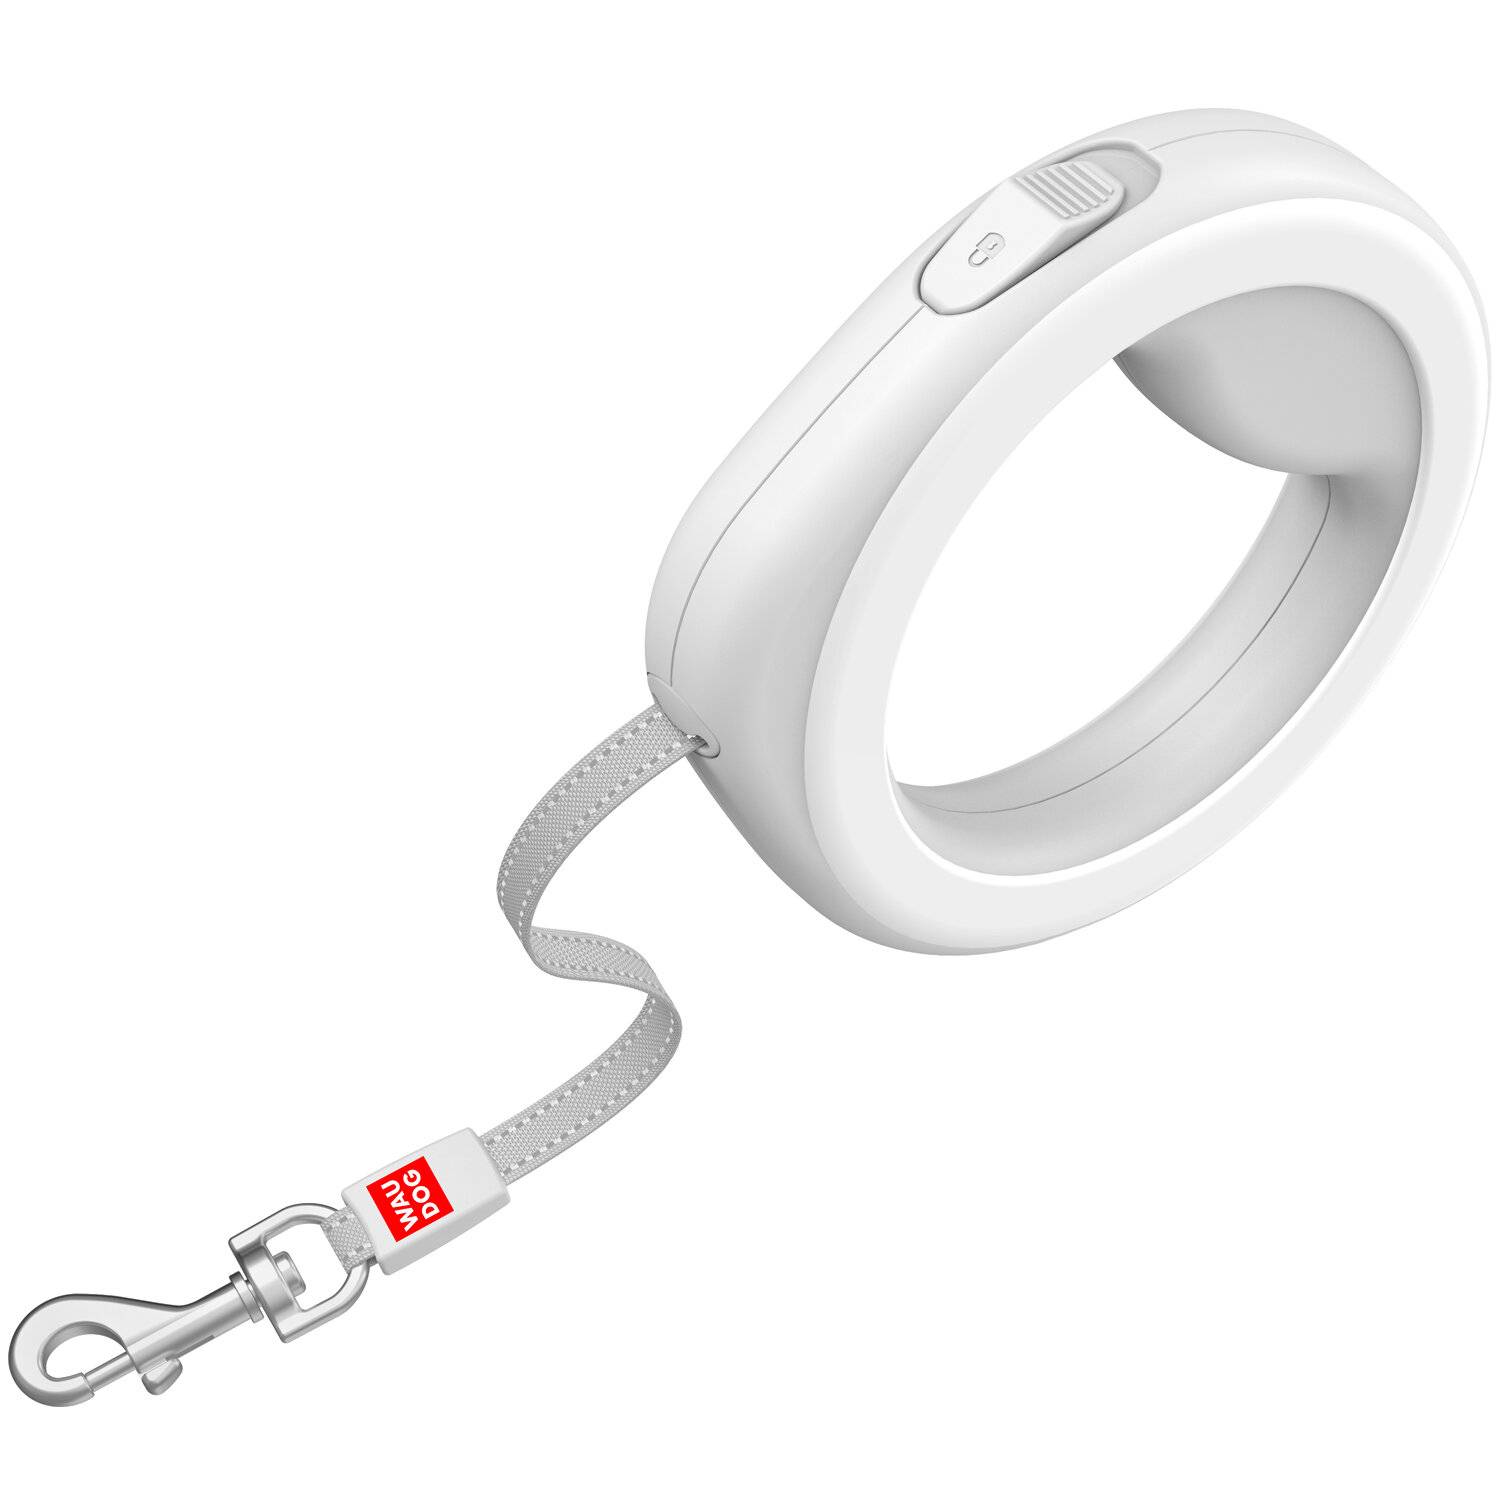 WAUDOG ring-shaped retractable leash